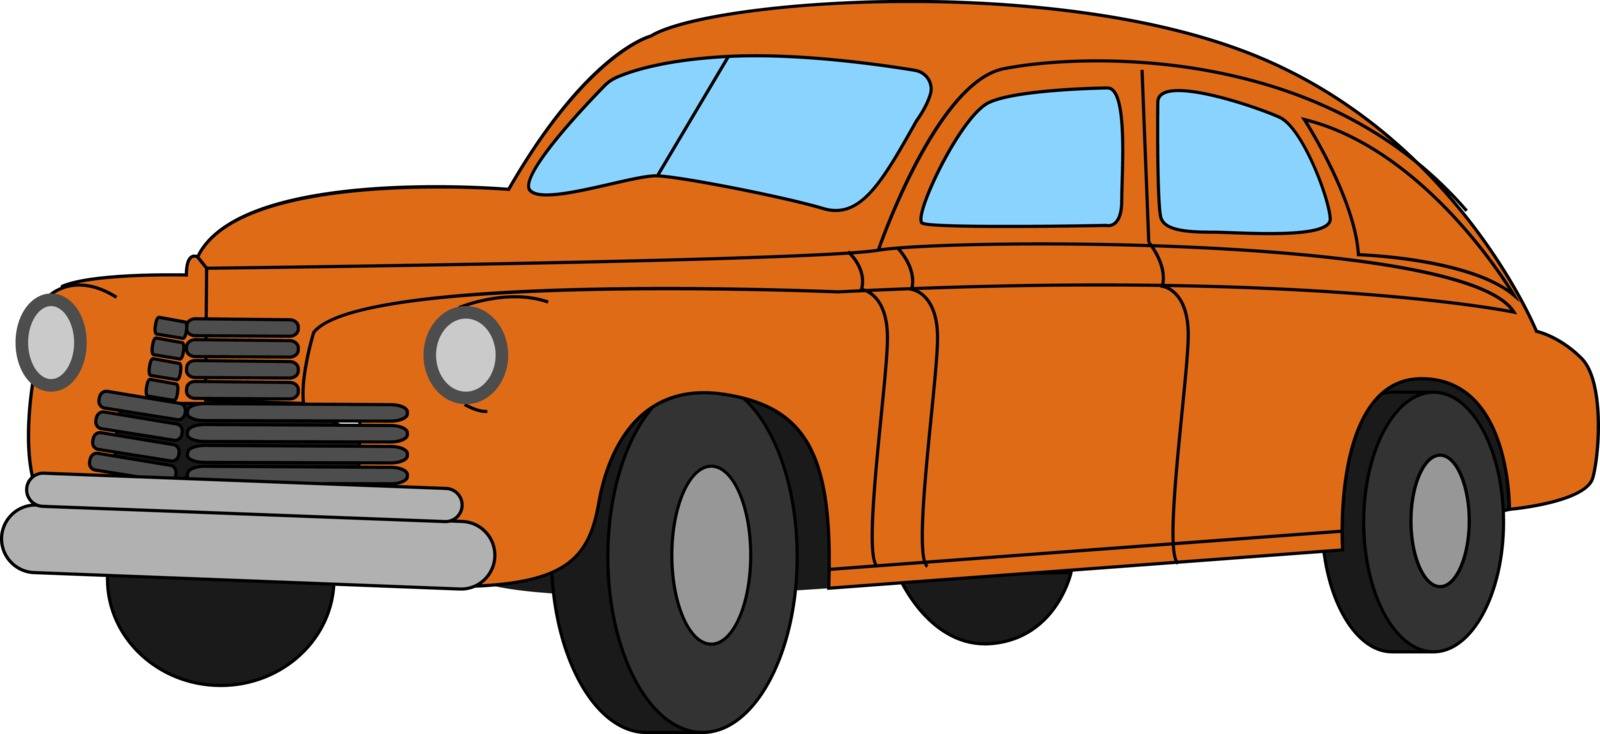 Red retro car, illustration, vector on white background.